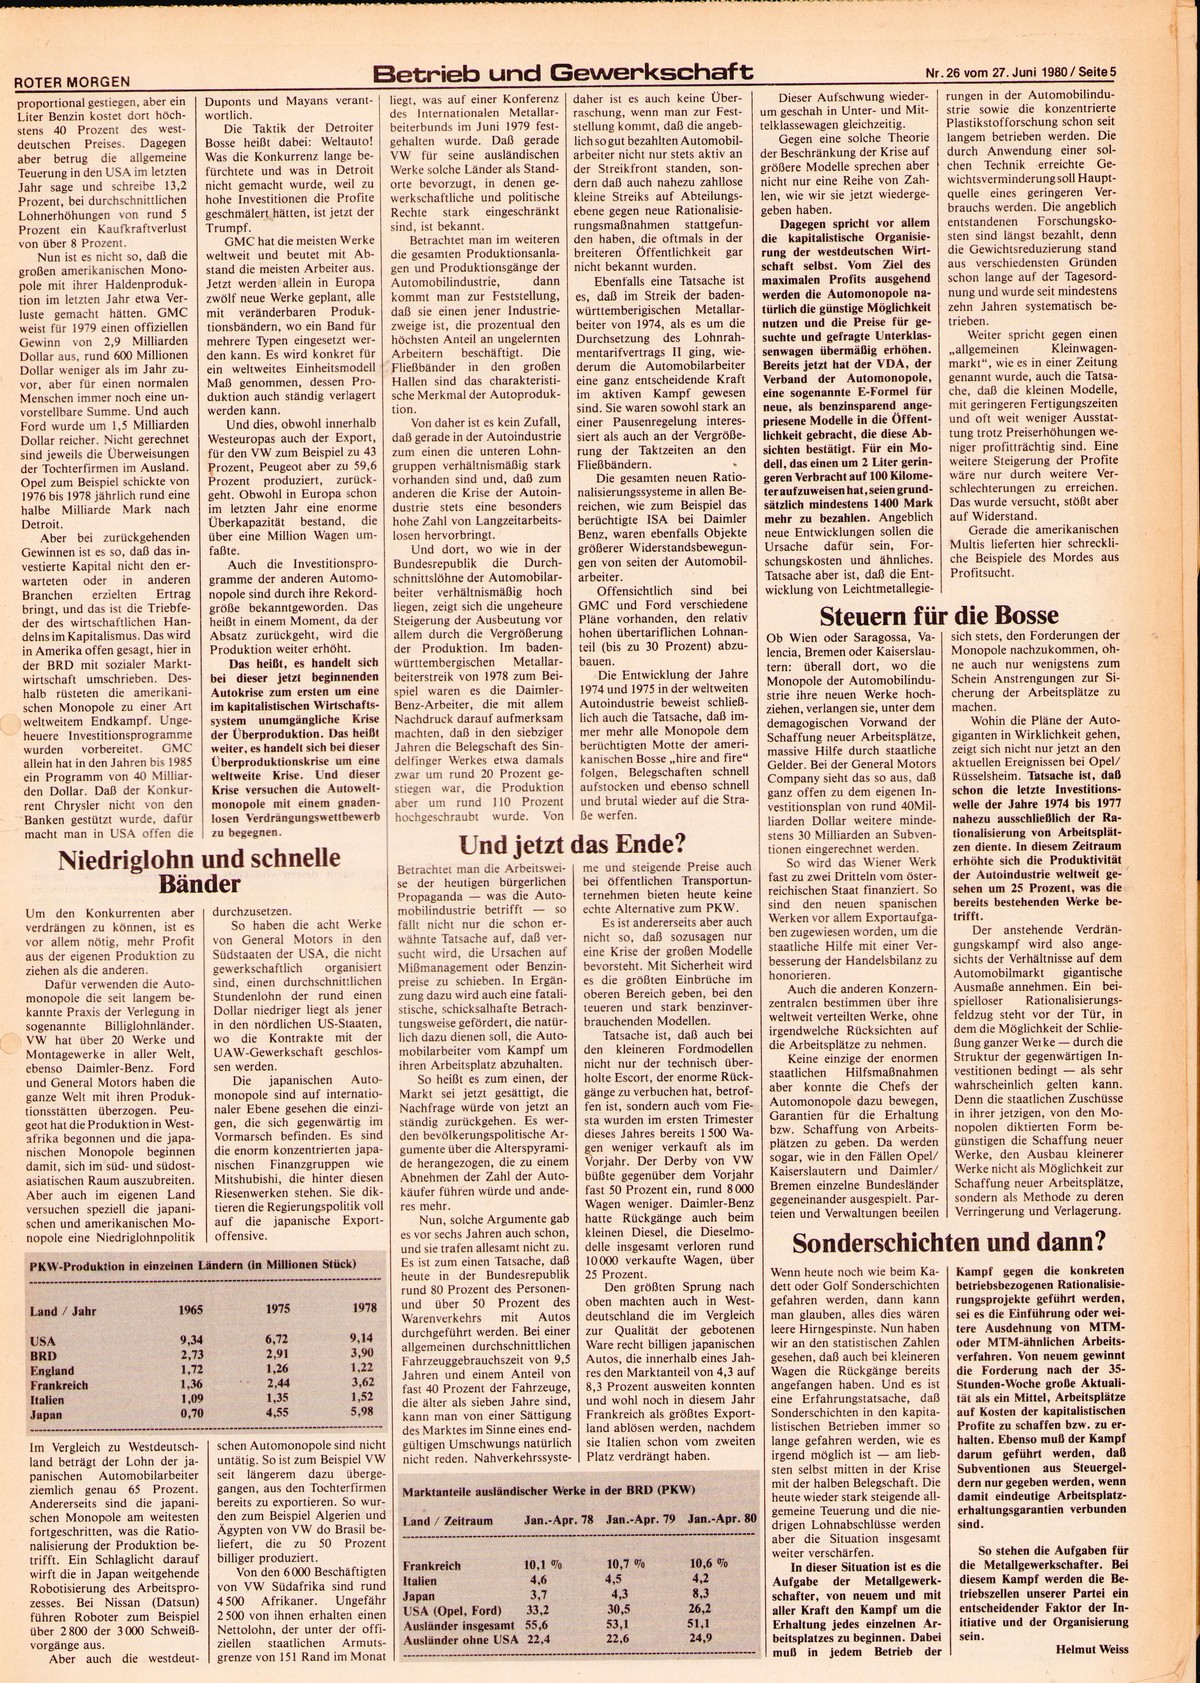 Roter Morgen, 14. Jg., 27. Juni 1980, Nr. 26, Seite 5